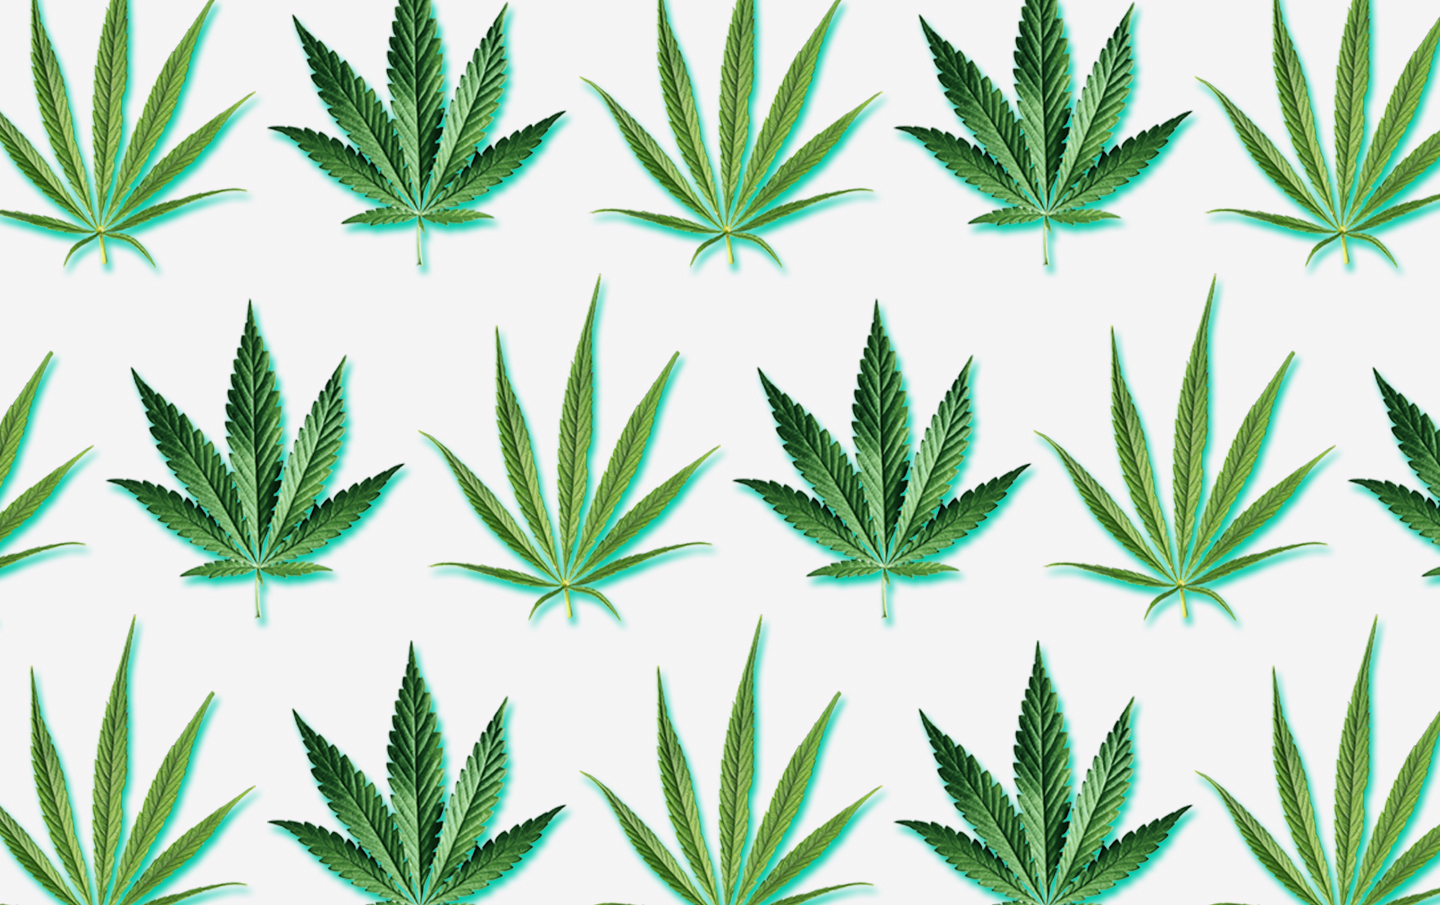 Indica and satvia cannabis plants